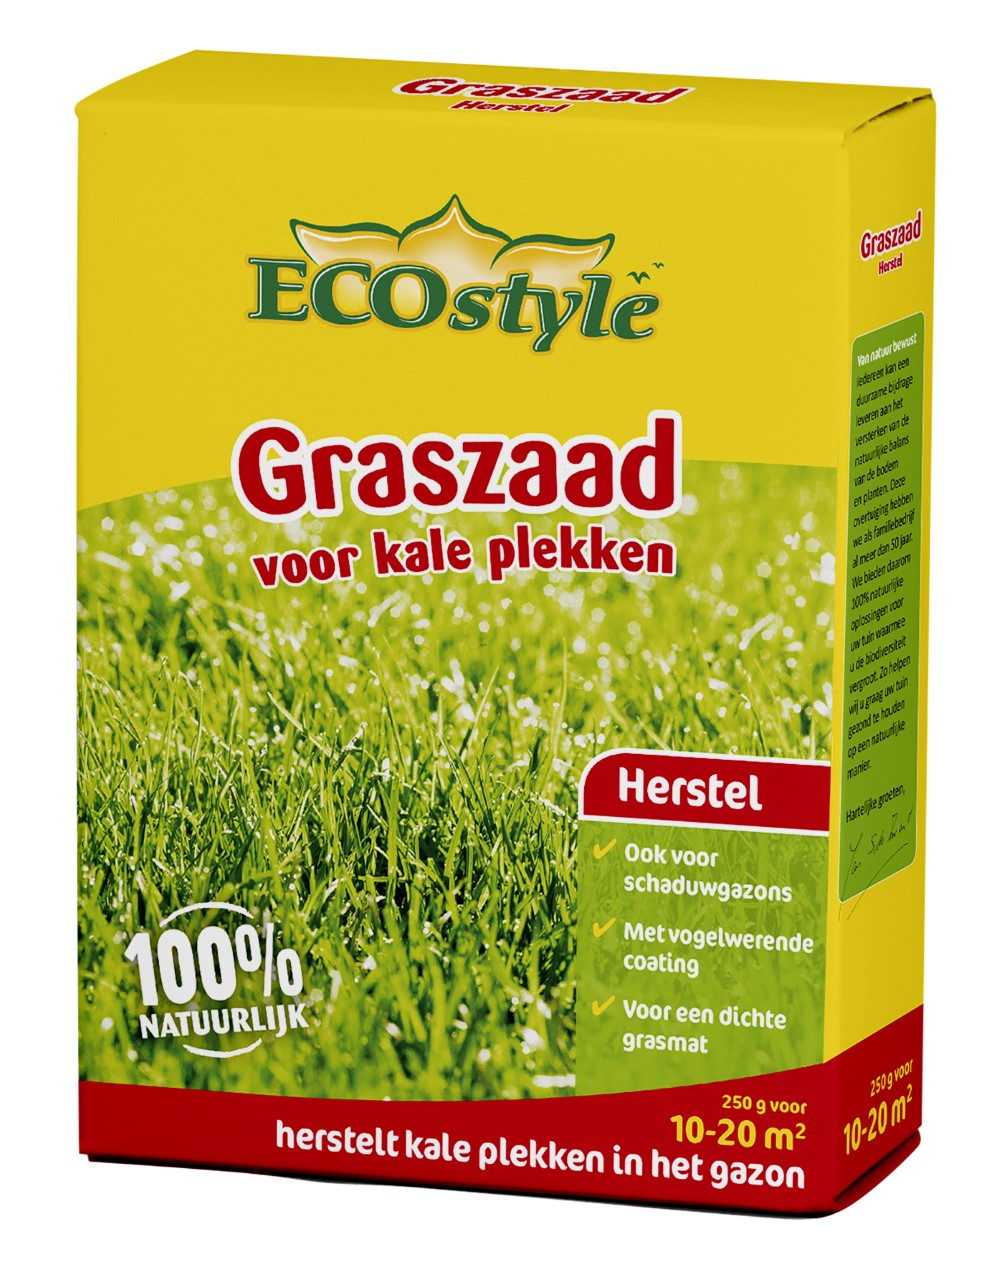 Ecostyle Graszaad Herstel 250 g